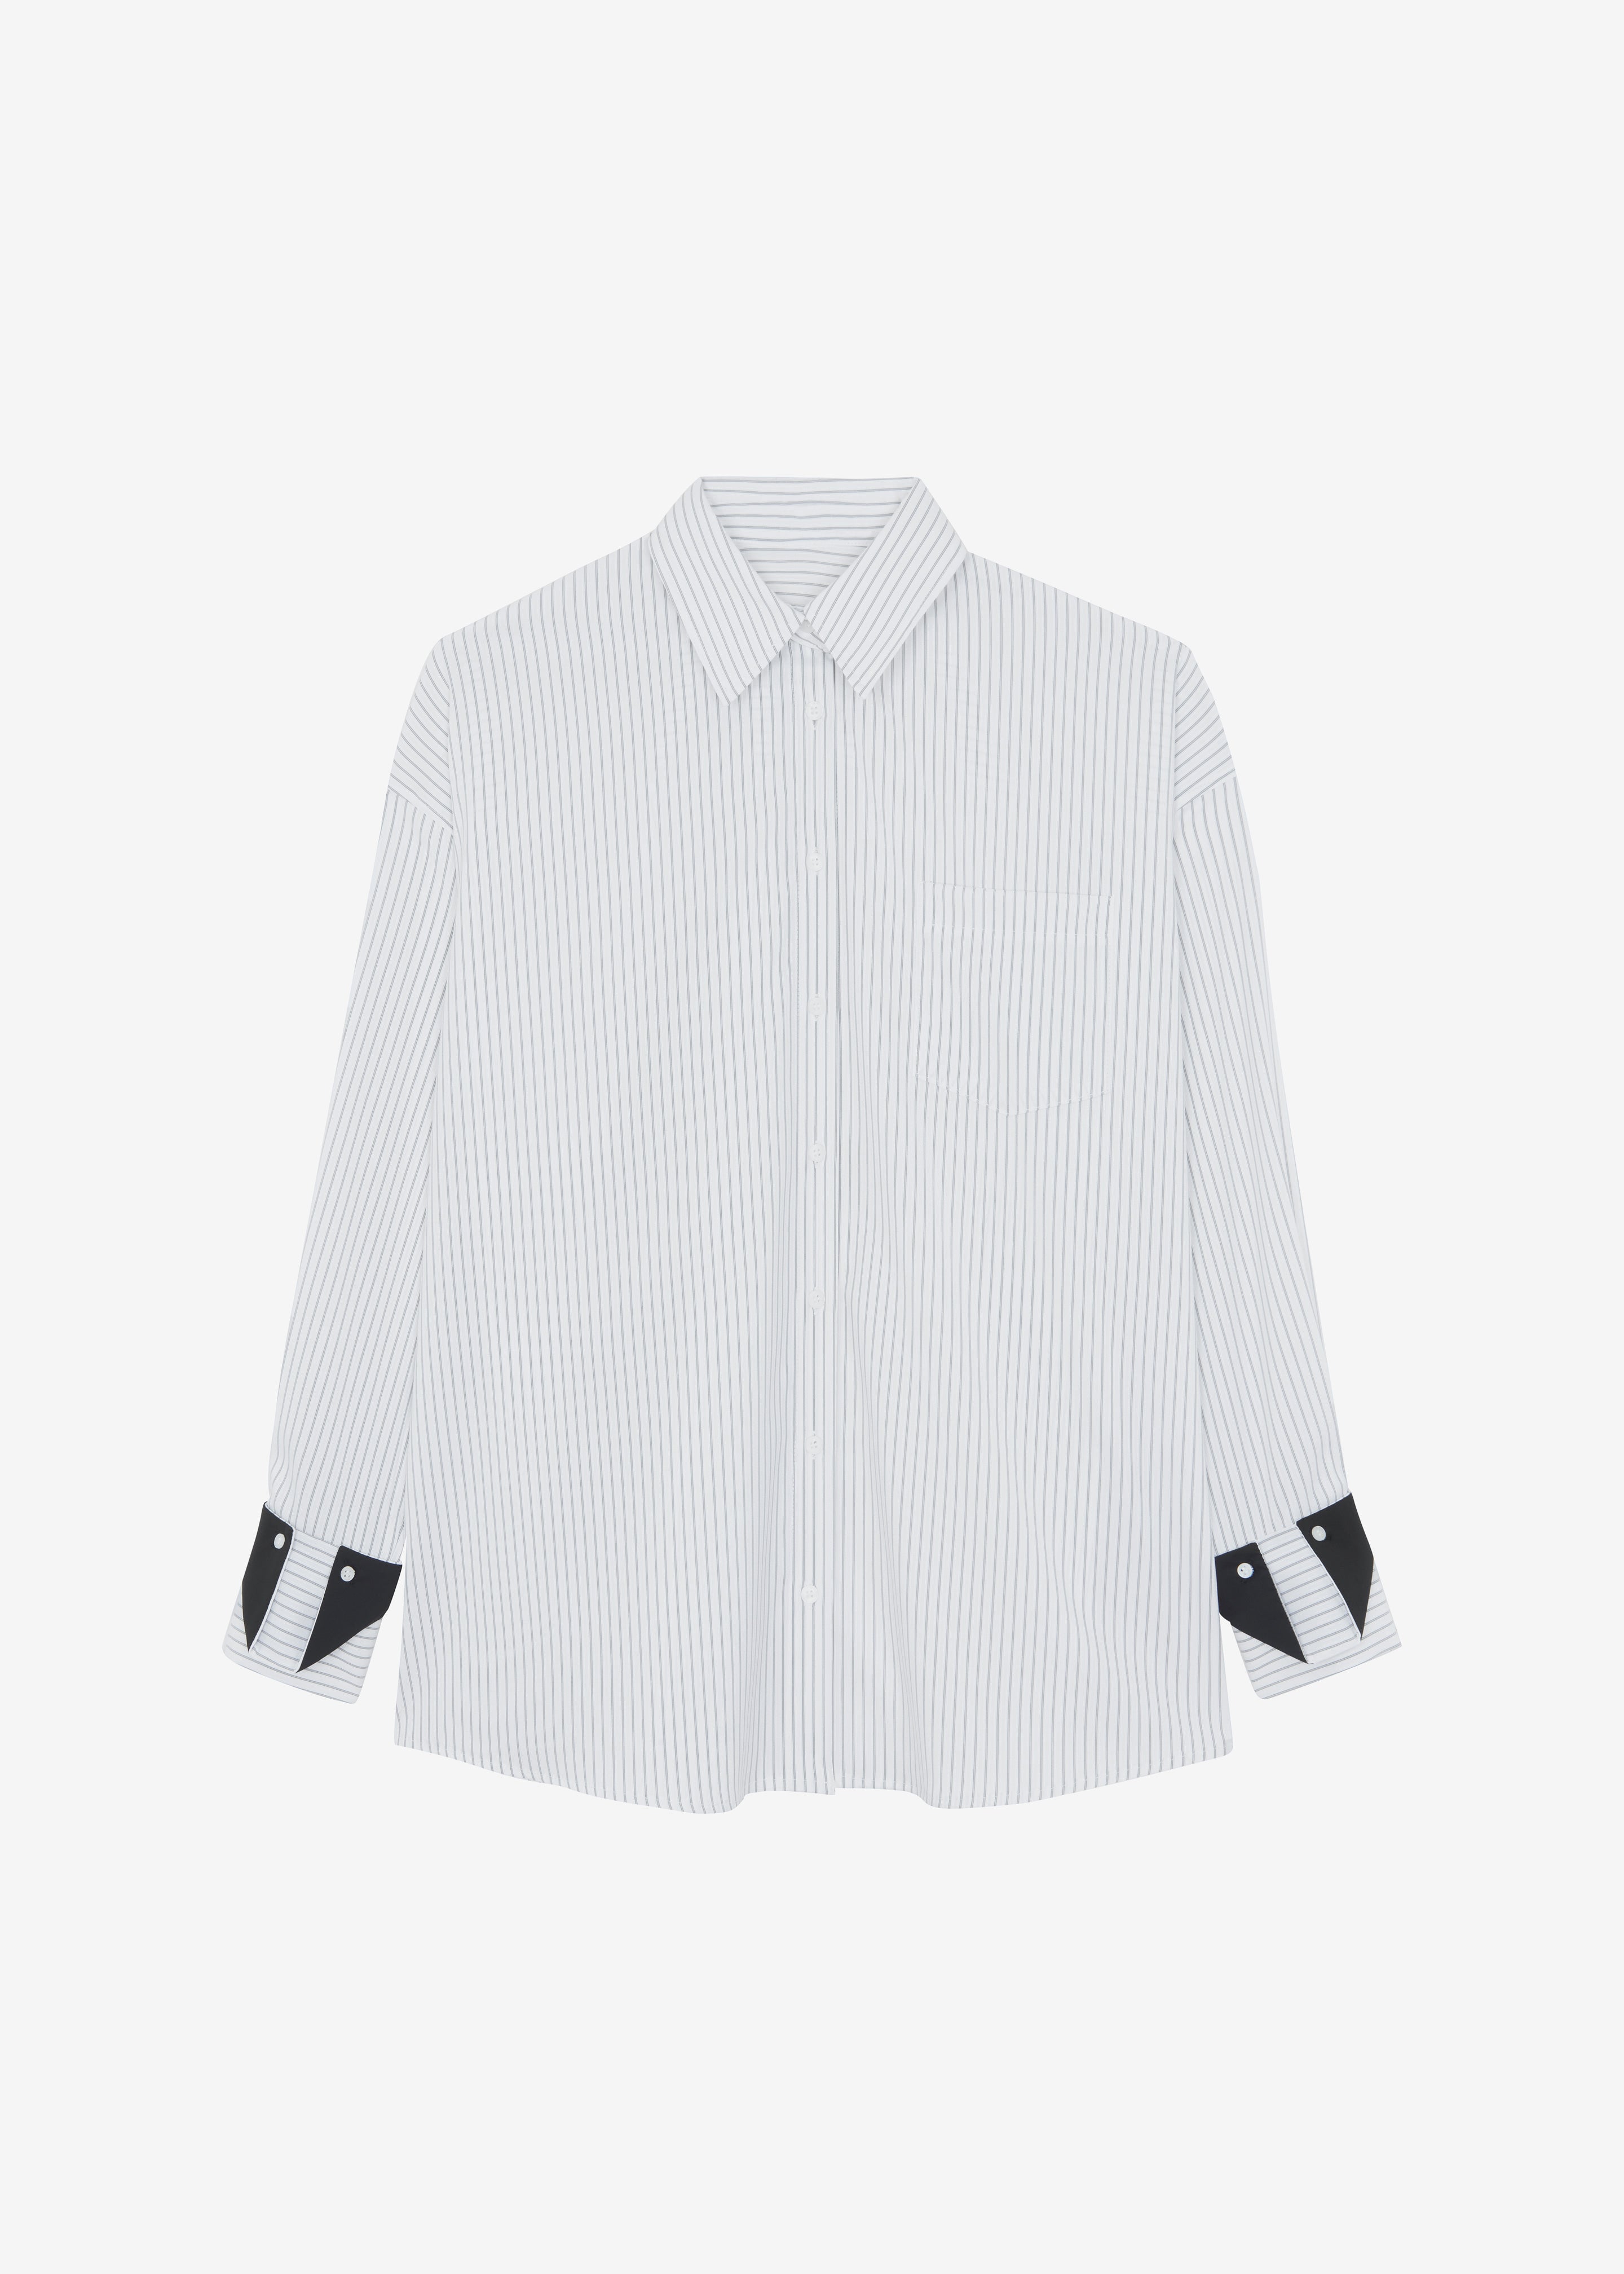 Leona Button Up Shirt - White/Grey Stripe - 9